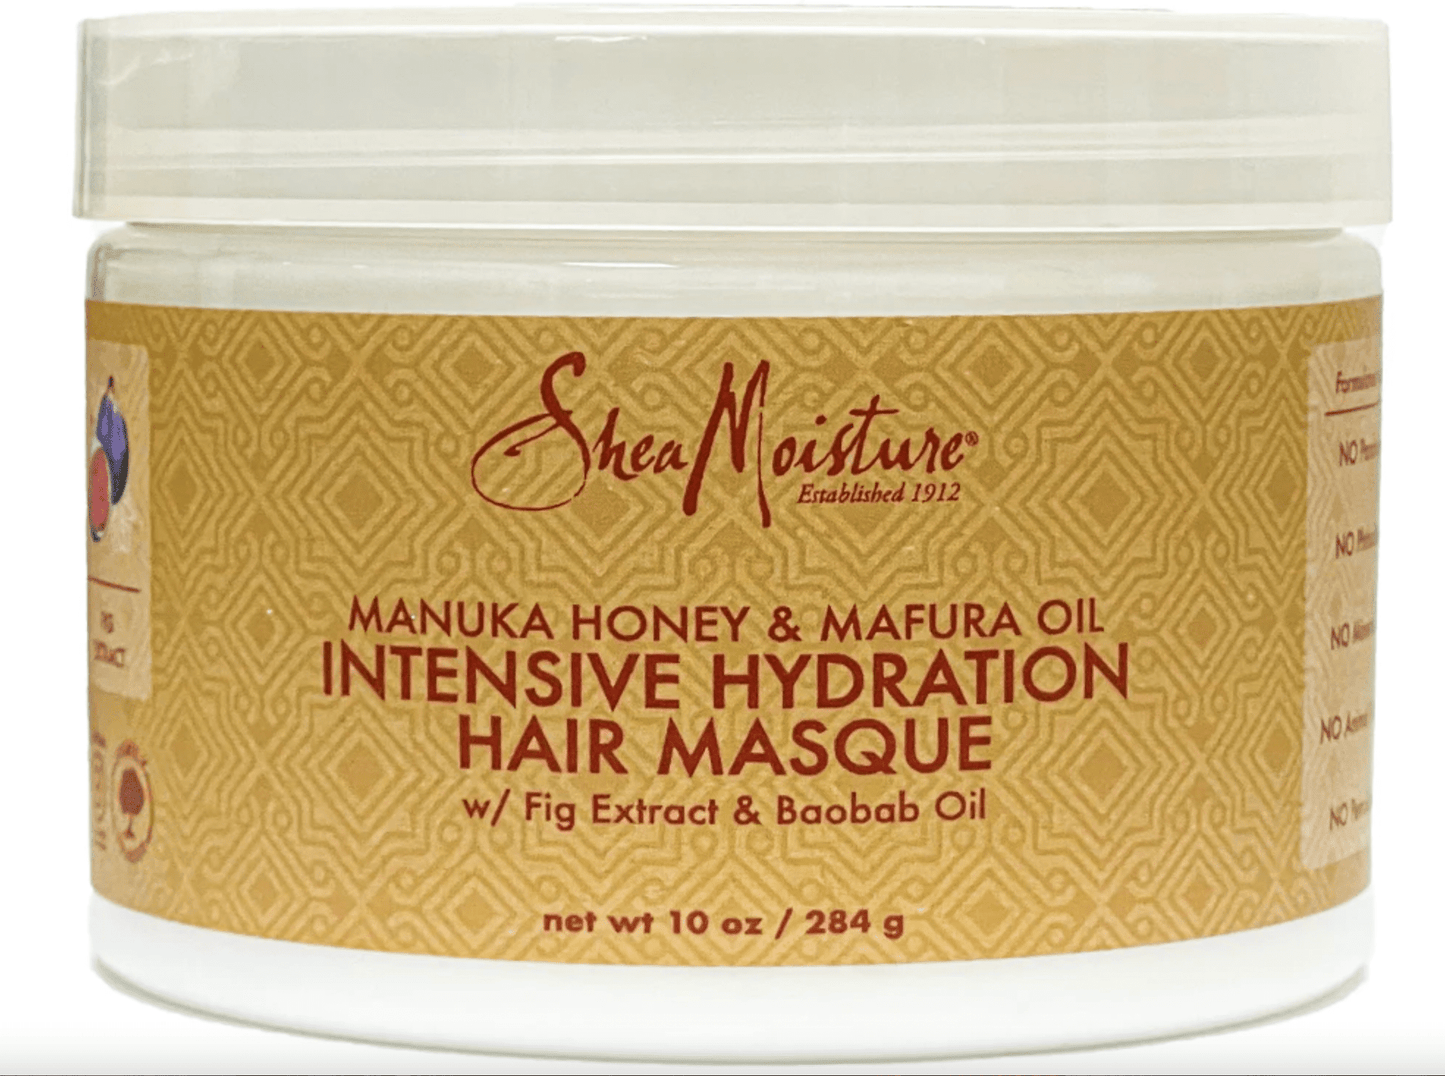 Shea Moisture - Manuka Honey & Mafura Oil - "Intensive hydration" hair mask - 284g - Shea Moisture - Ethni Beauty Market